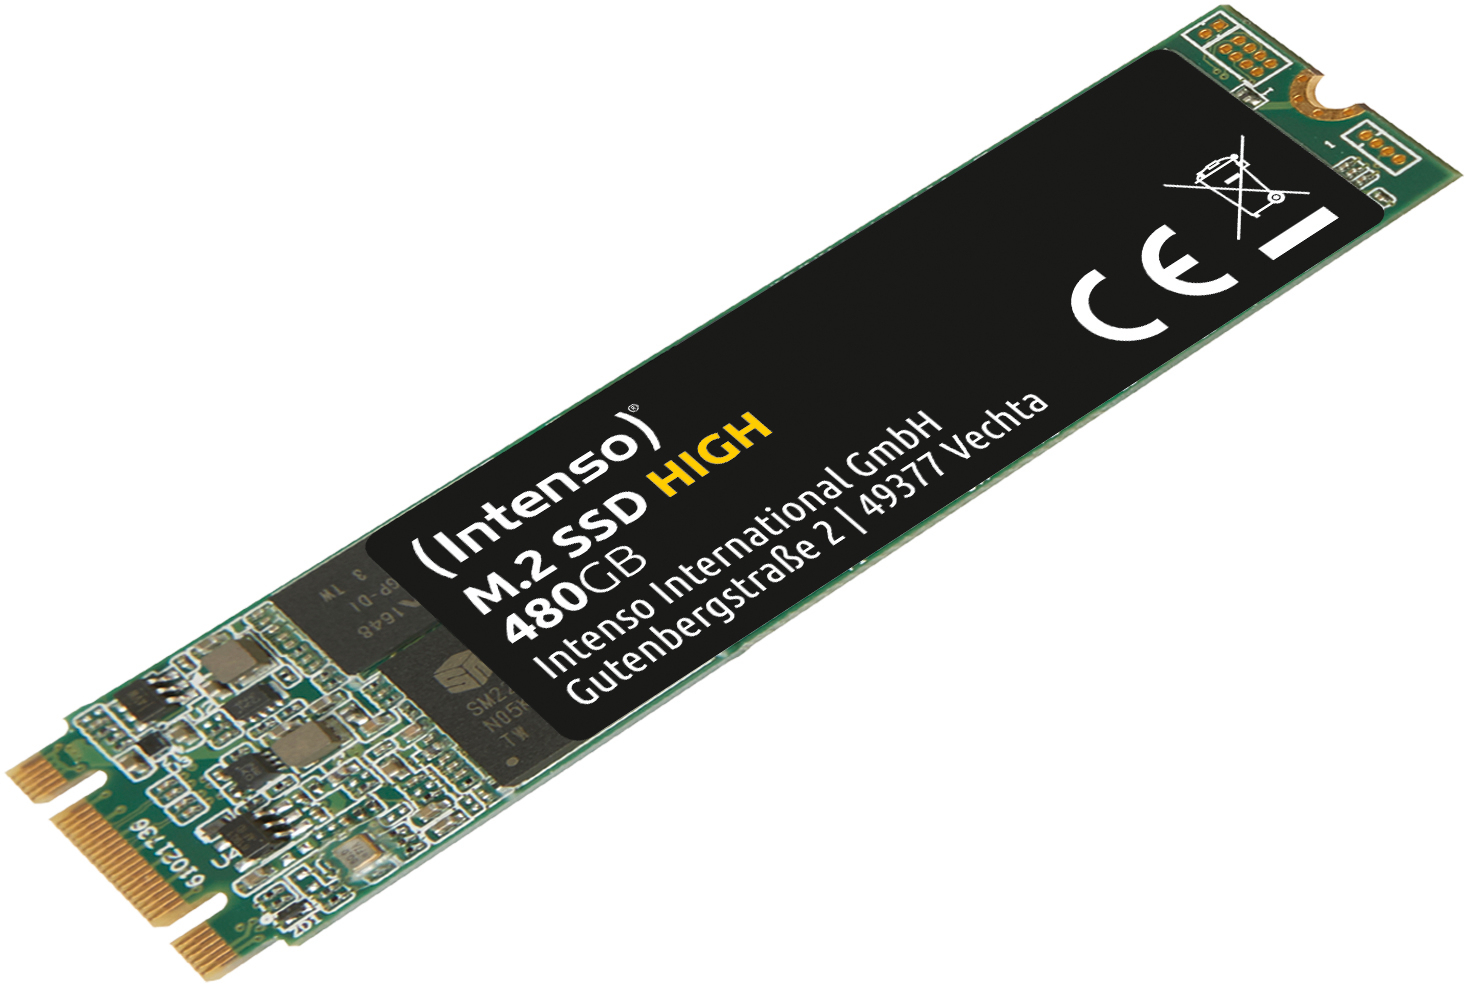 INTENSO High Performance Festplatte GB intern 480 SATA Gbps, Retail, mSSD 6